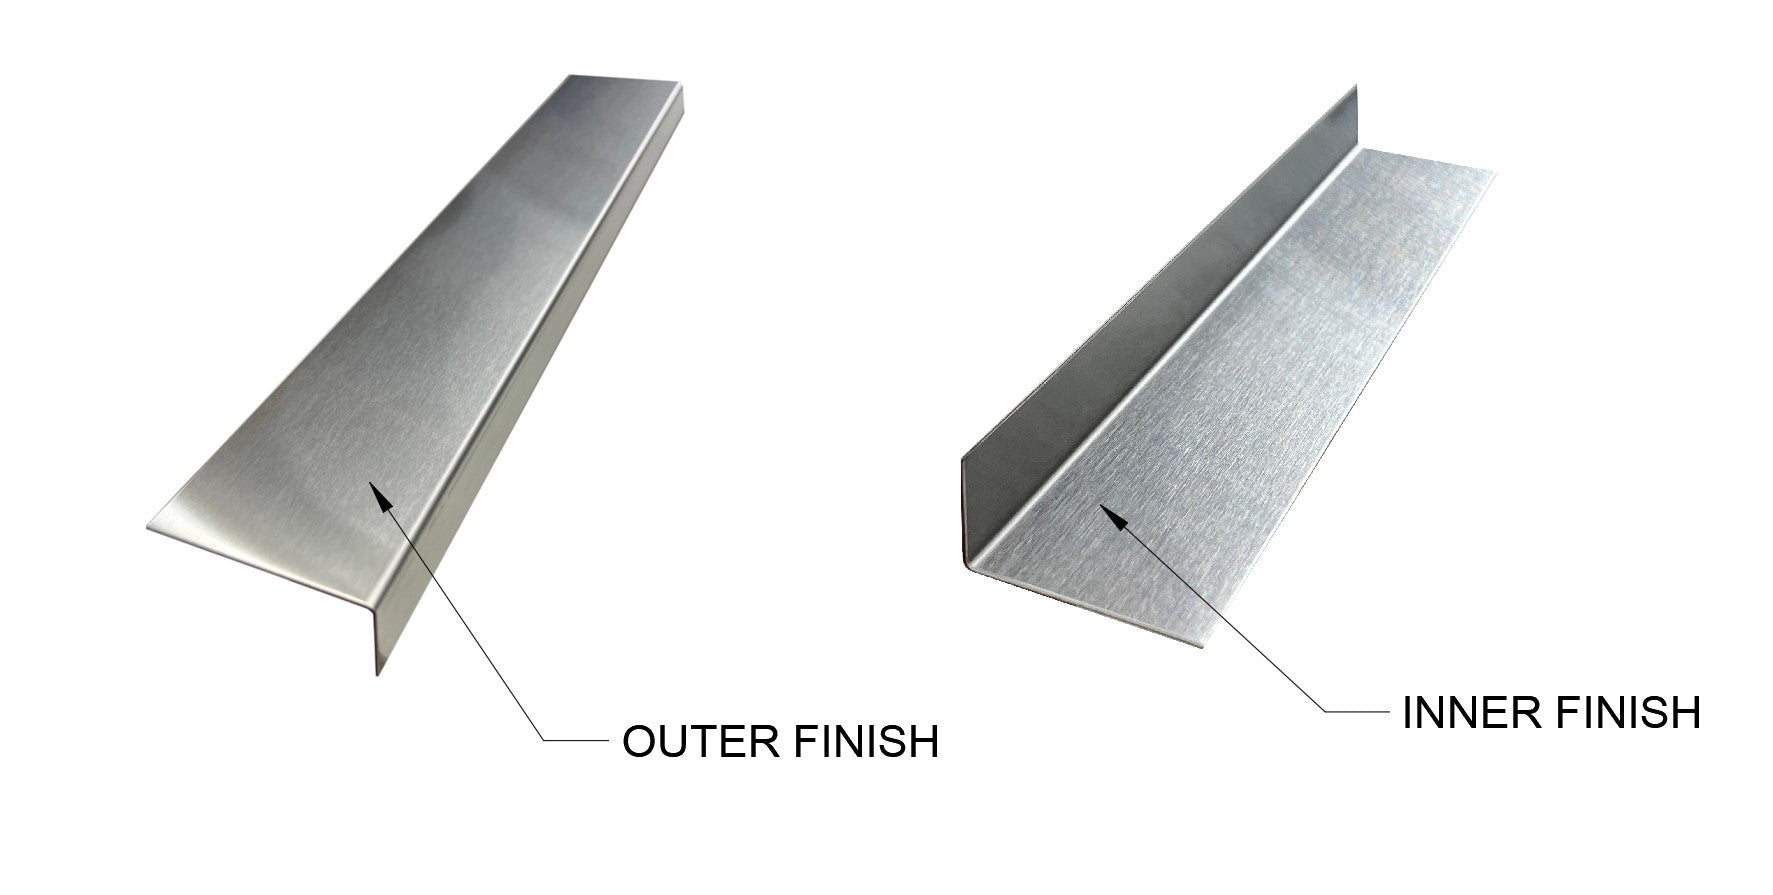 Brushed Grade 304 Stainless Steel Universal Gap Filler Finishing Angle Trim Kit Elements, 24in Long